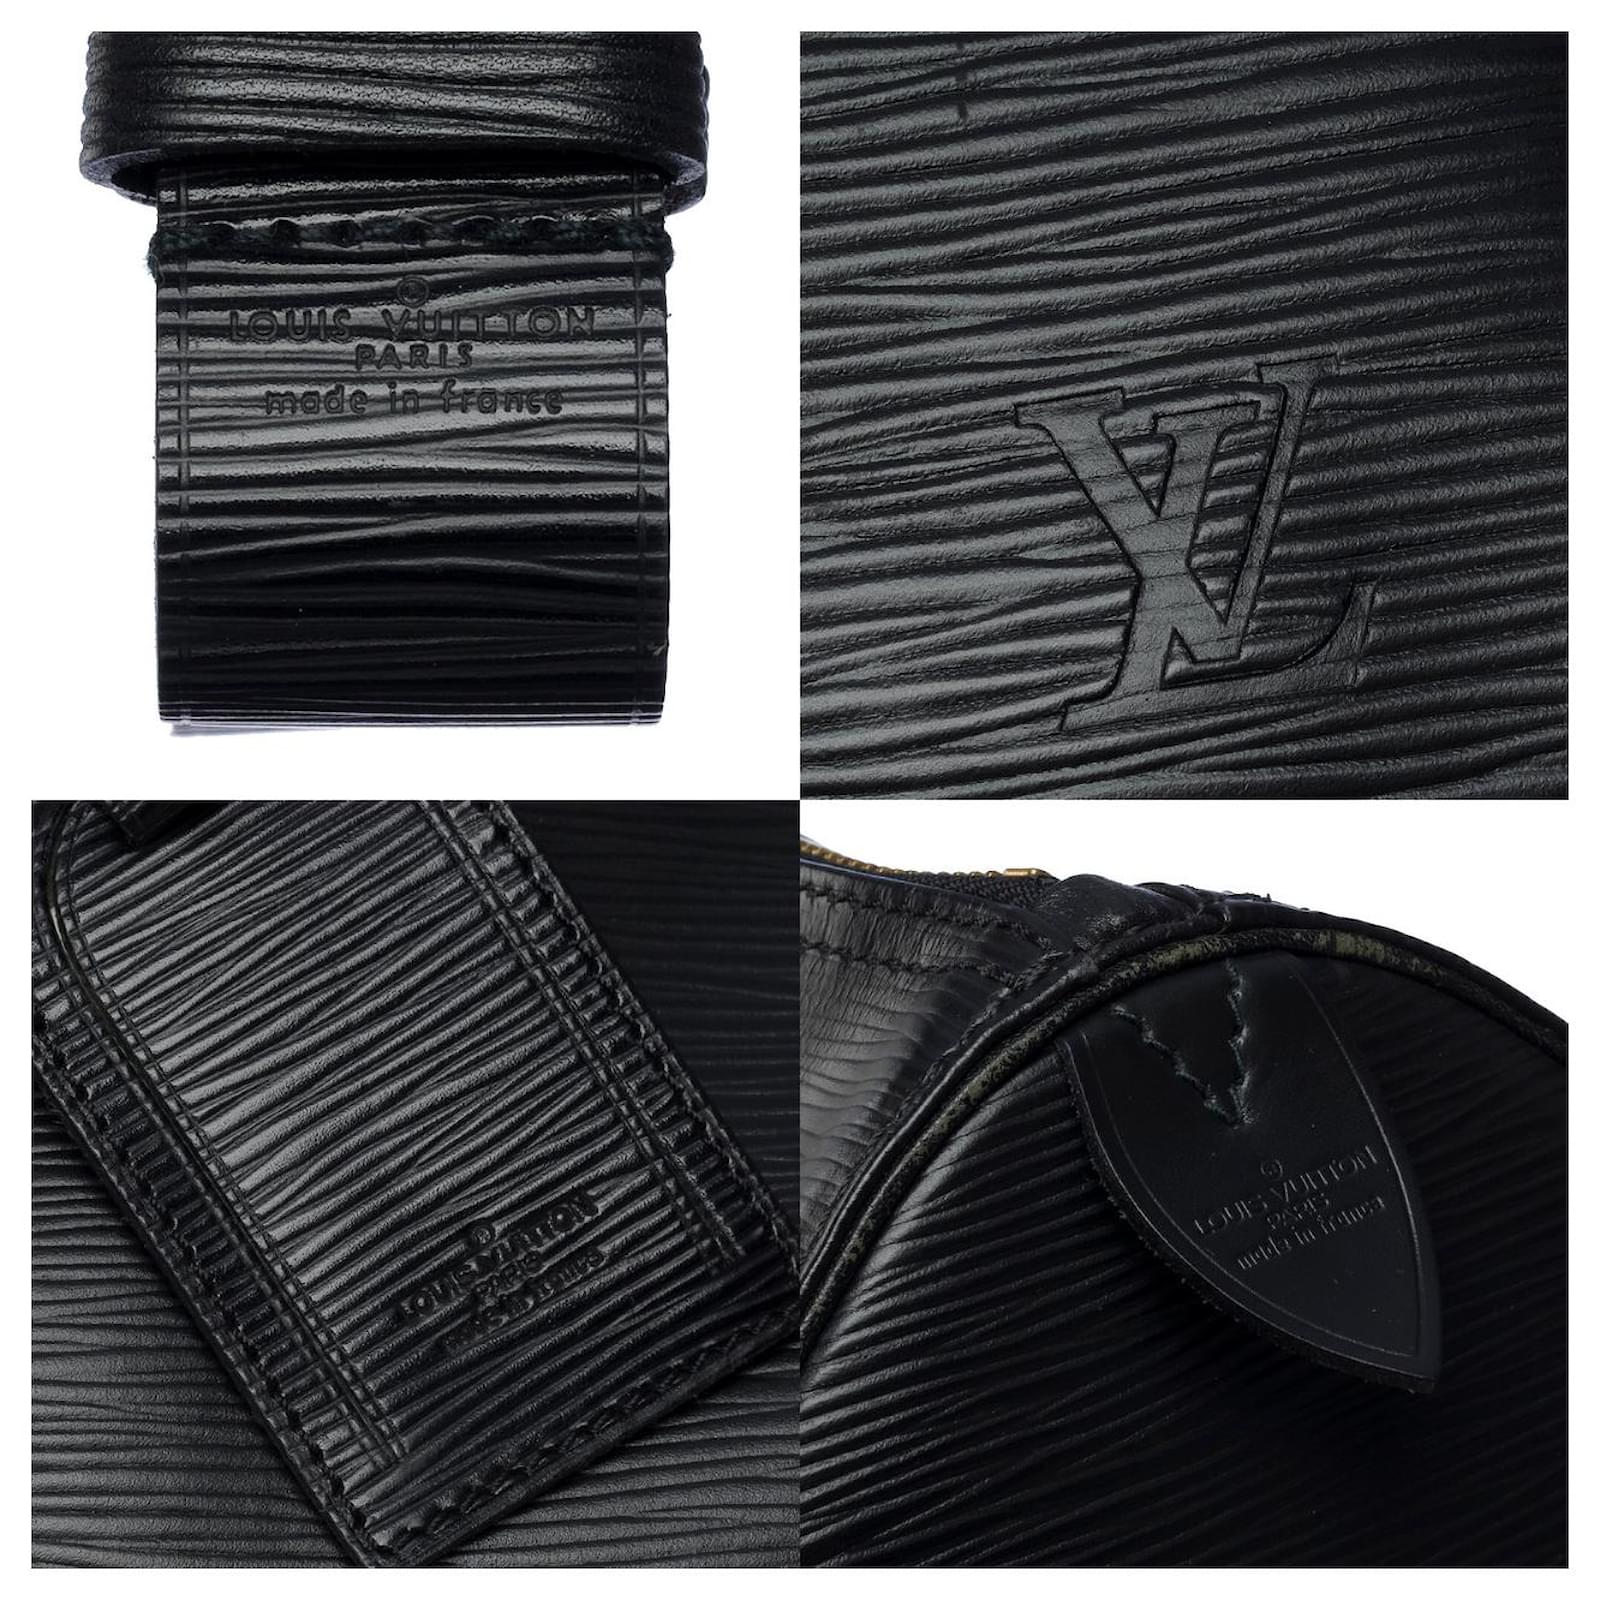 Borsa da viaggio Louis Vuitton Keepall 50 cm in pelle Epi nera e